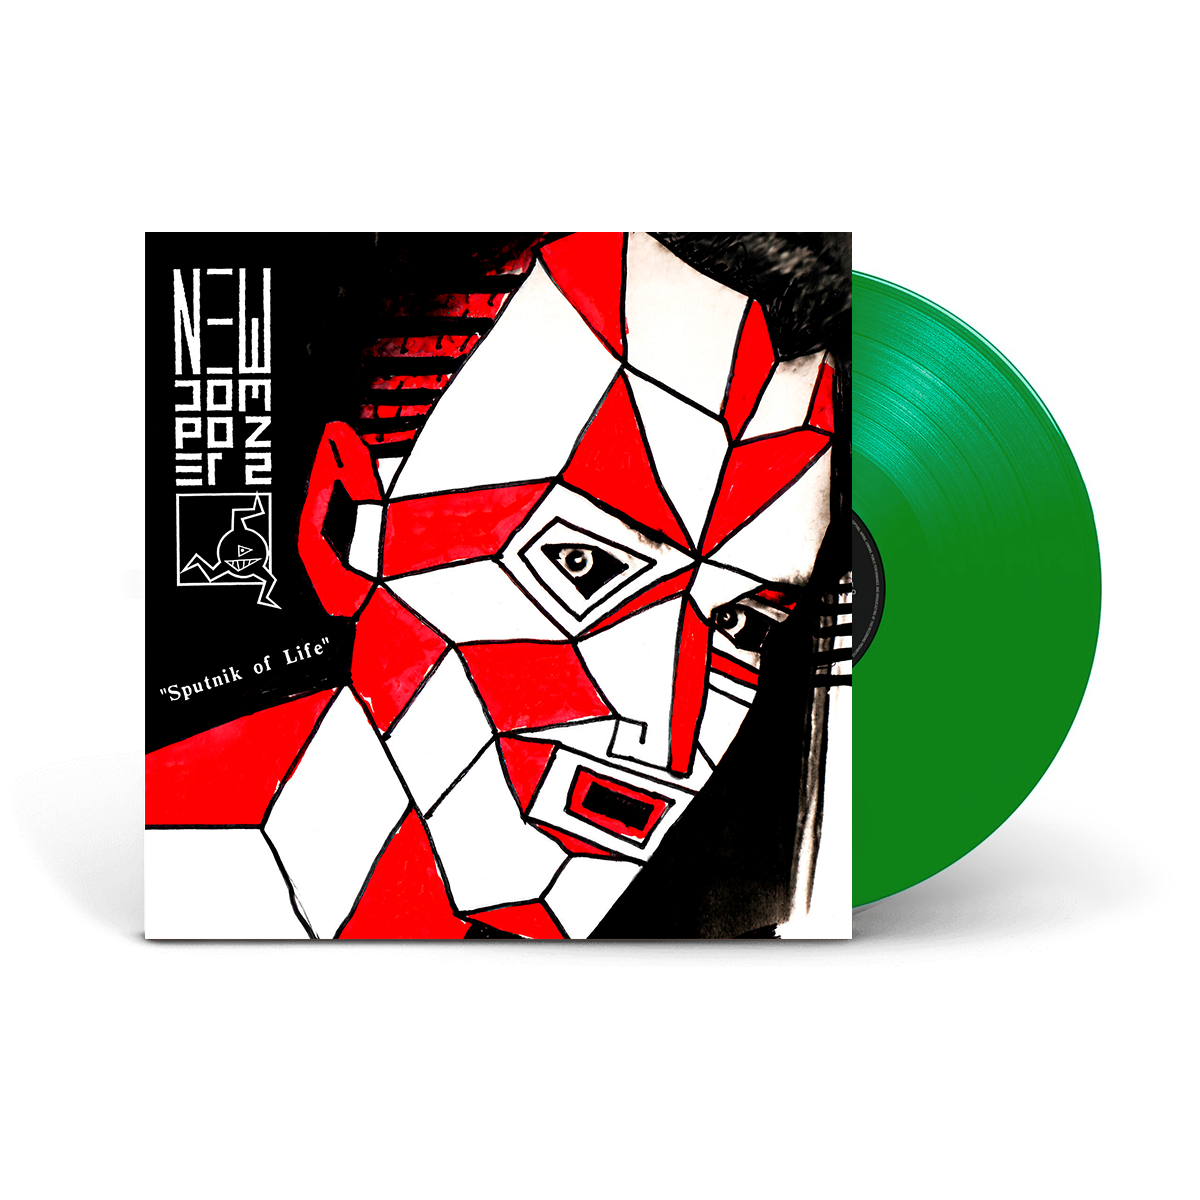 Виниловая пластинка EP": New Composers — «Sputnik Of Life EP» (1990/2022) [Green Vinyl]